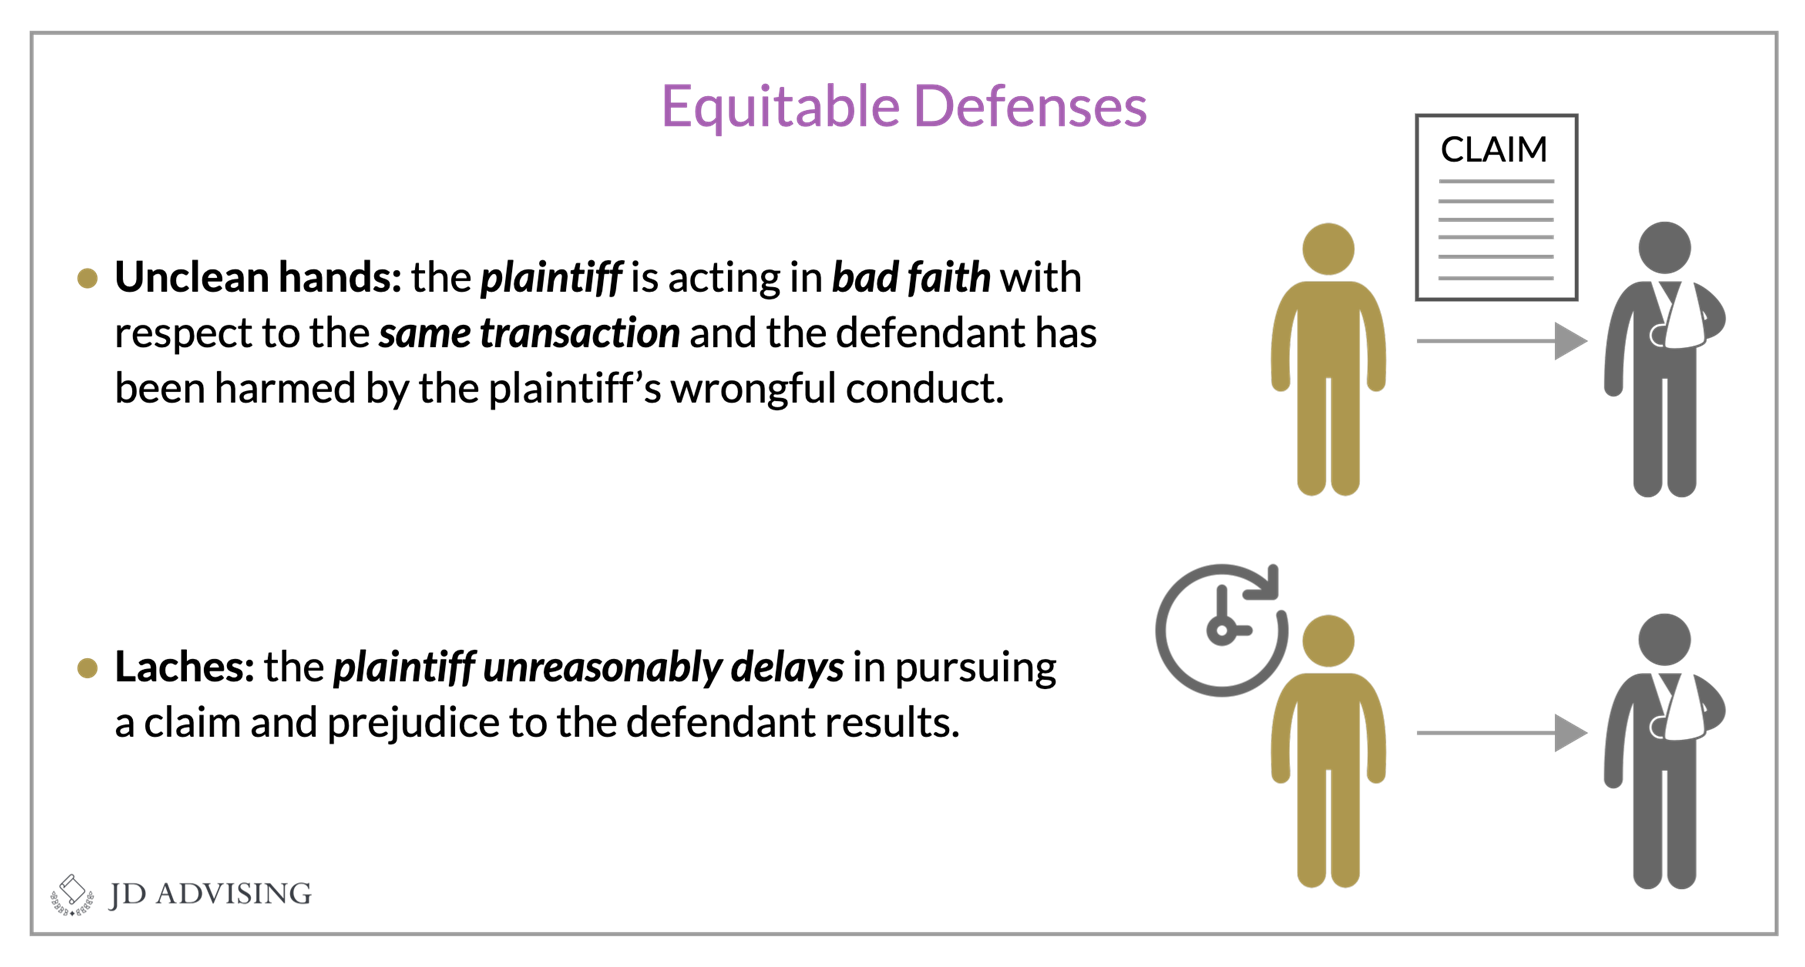 Equitable defenses